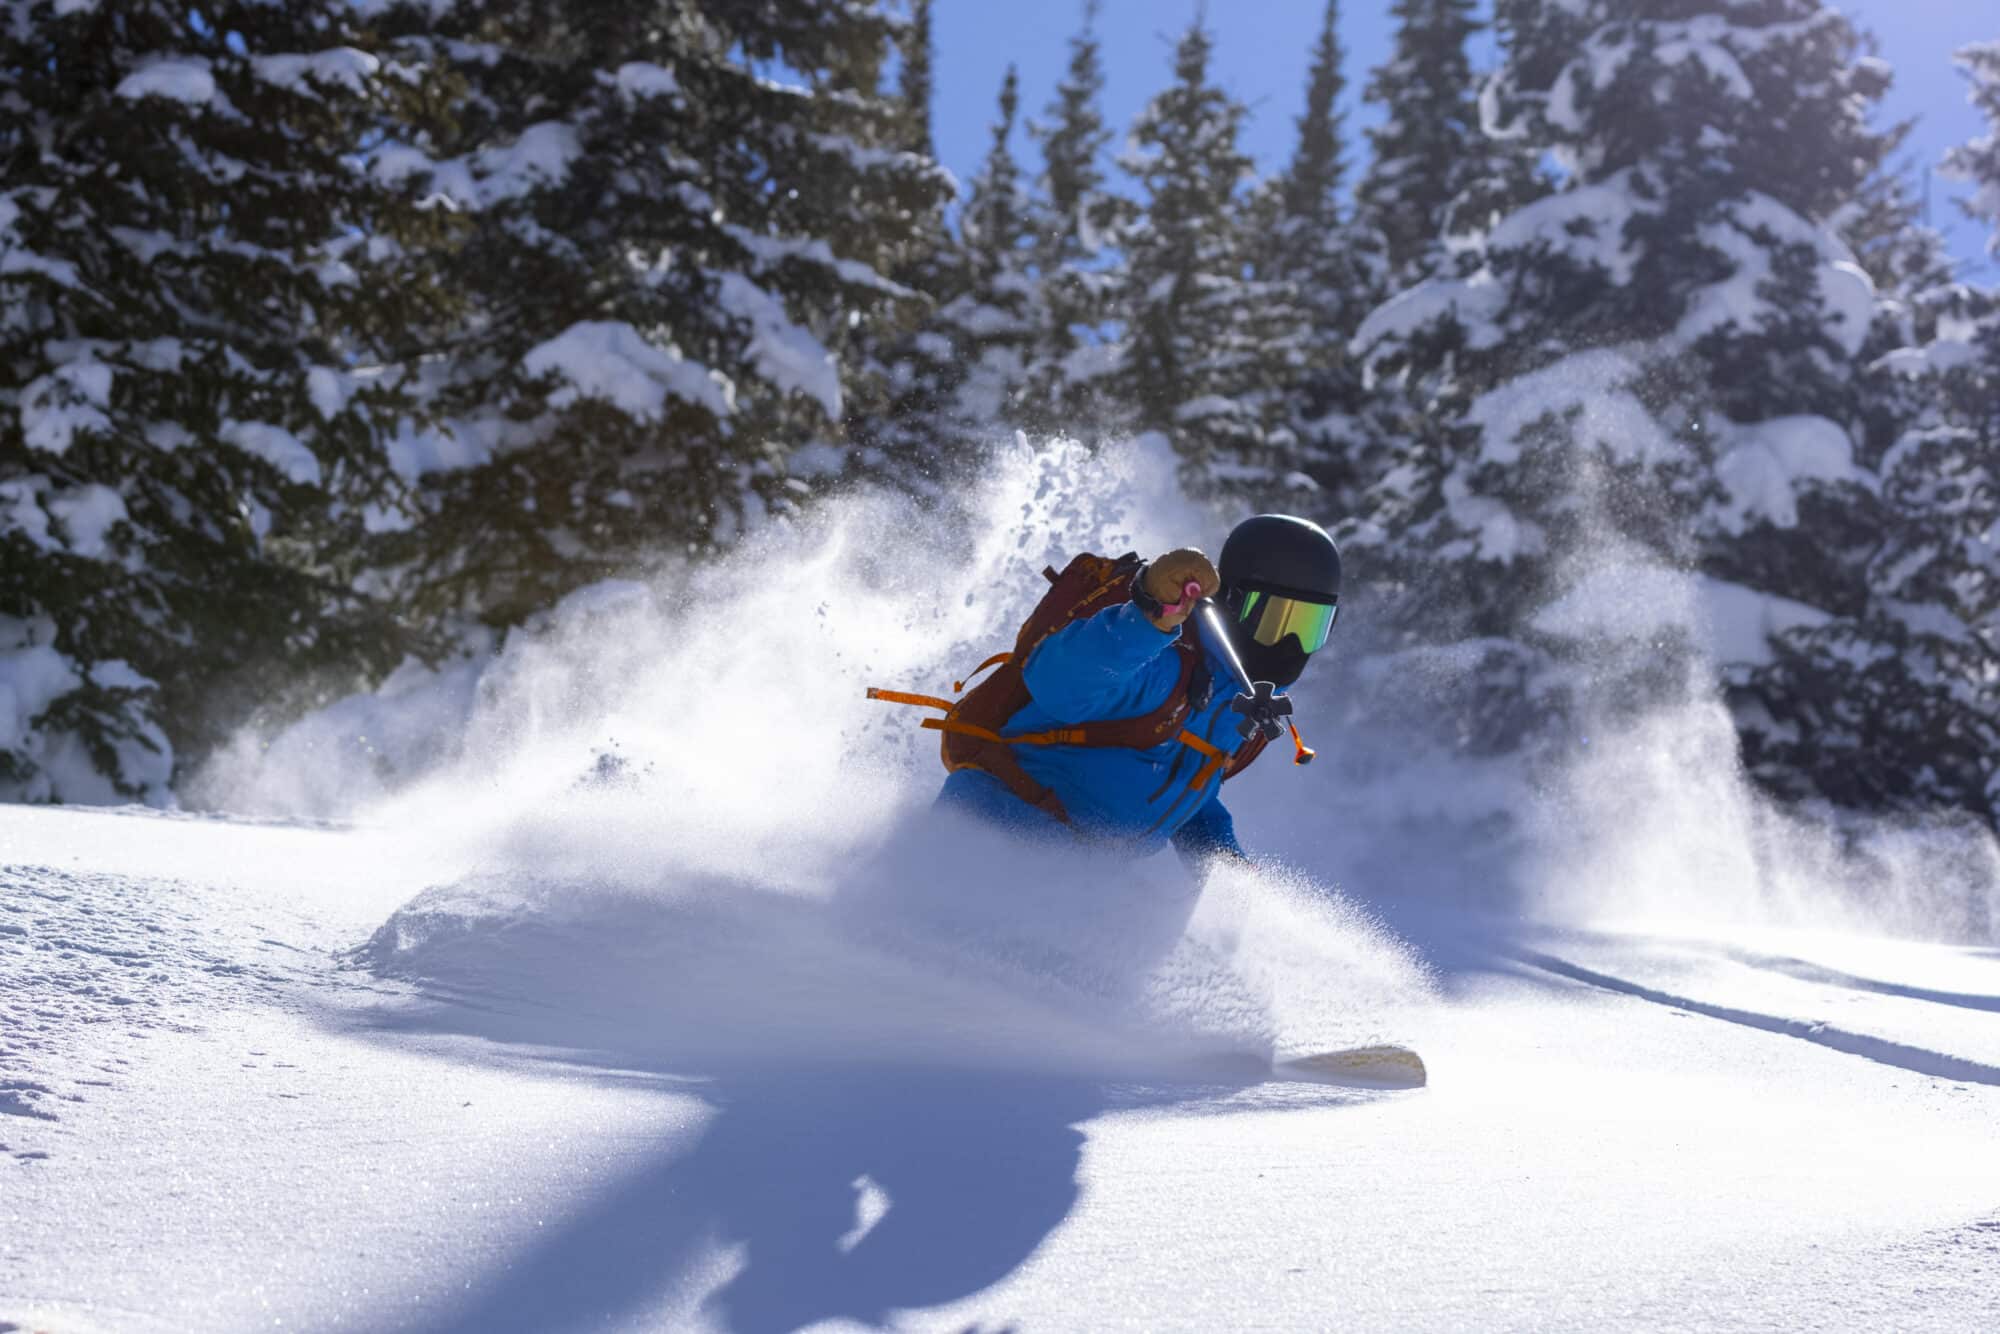 Skiers turns through waist deep powder on a snowcat skiing trip